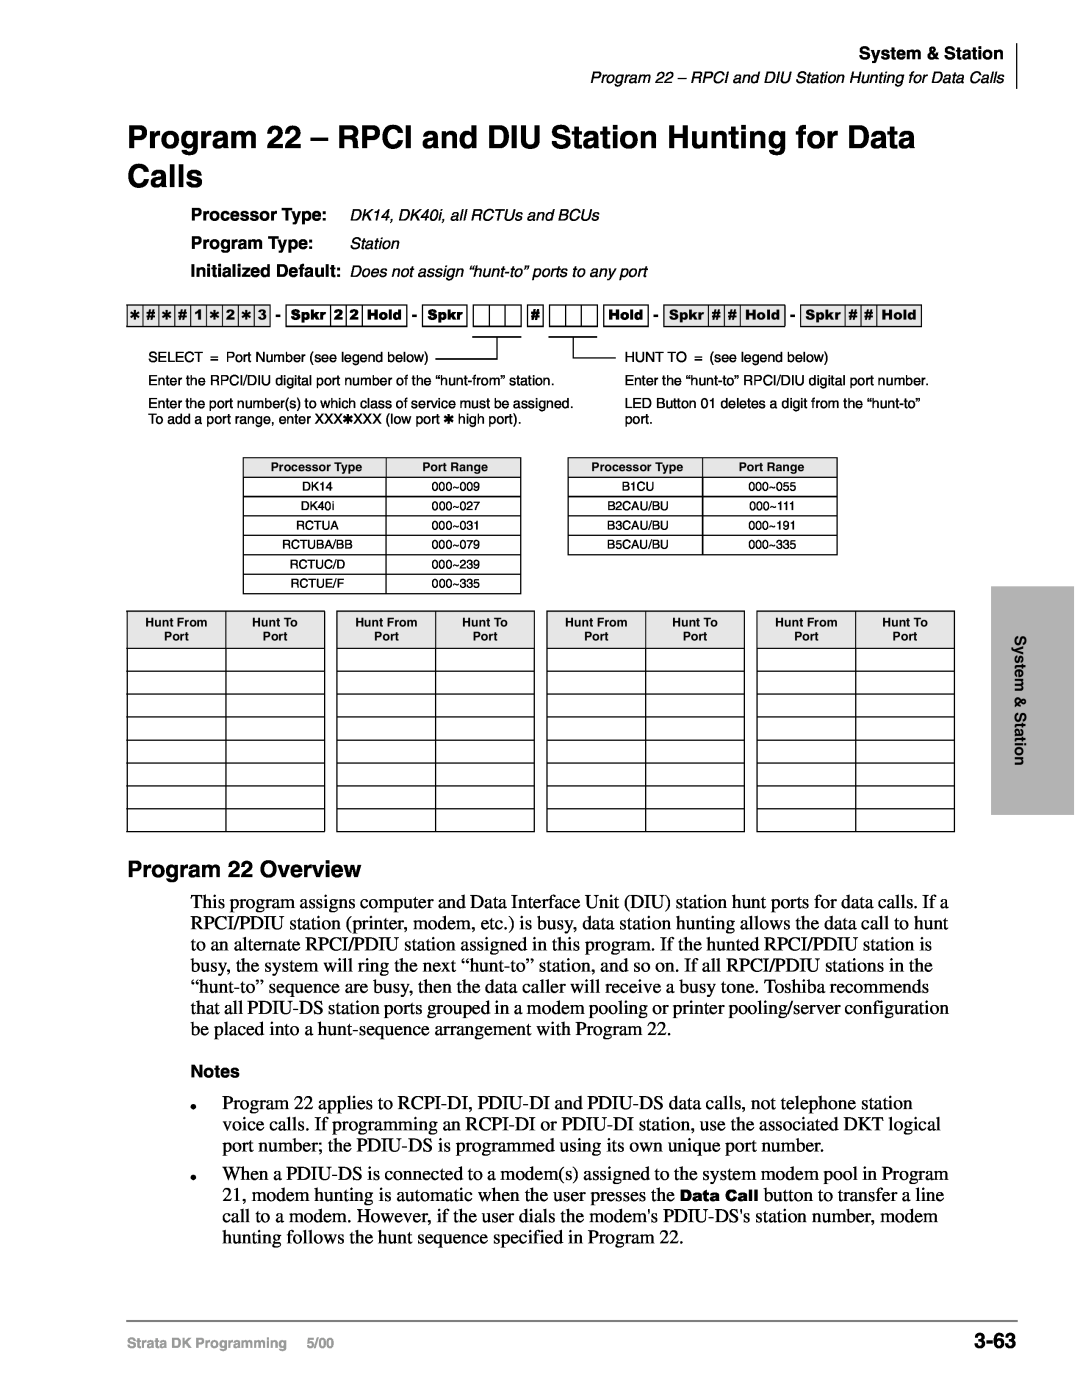 Toshiba DK424I, dk14, DK40I manual Program 22 Overview, 3-63 